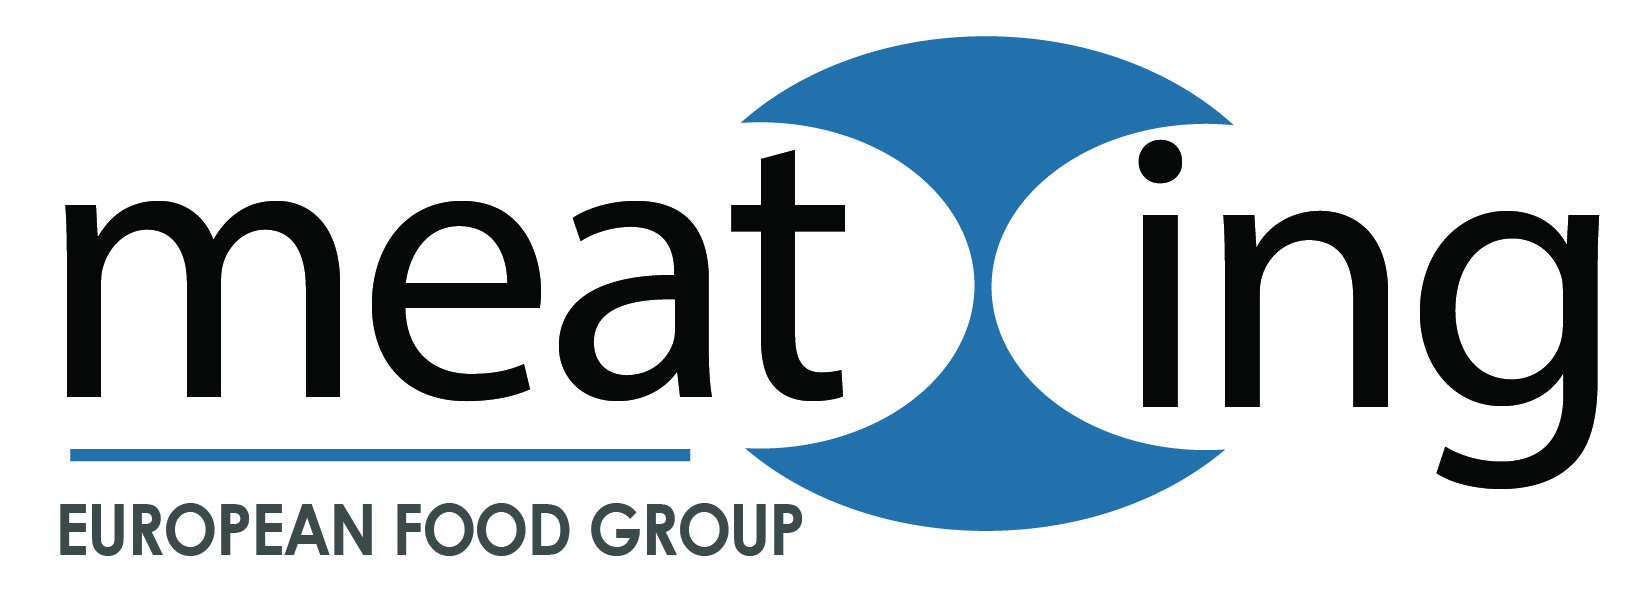 id74 - Meating - European Food Group (2020)-01_anonymous.jpg